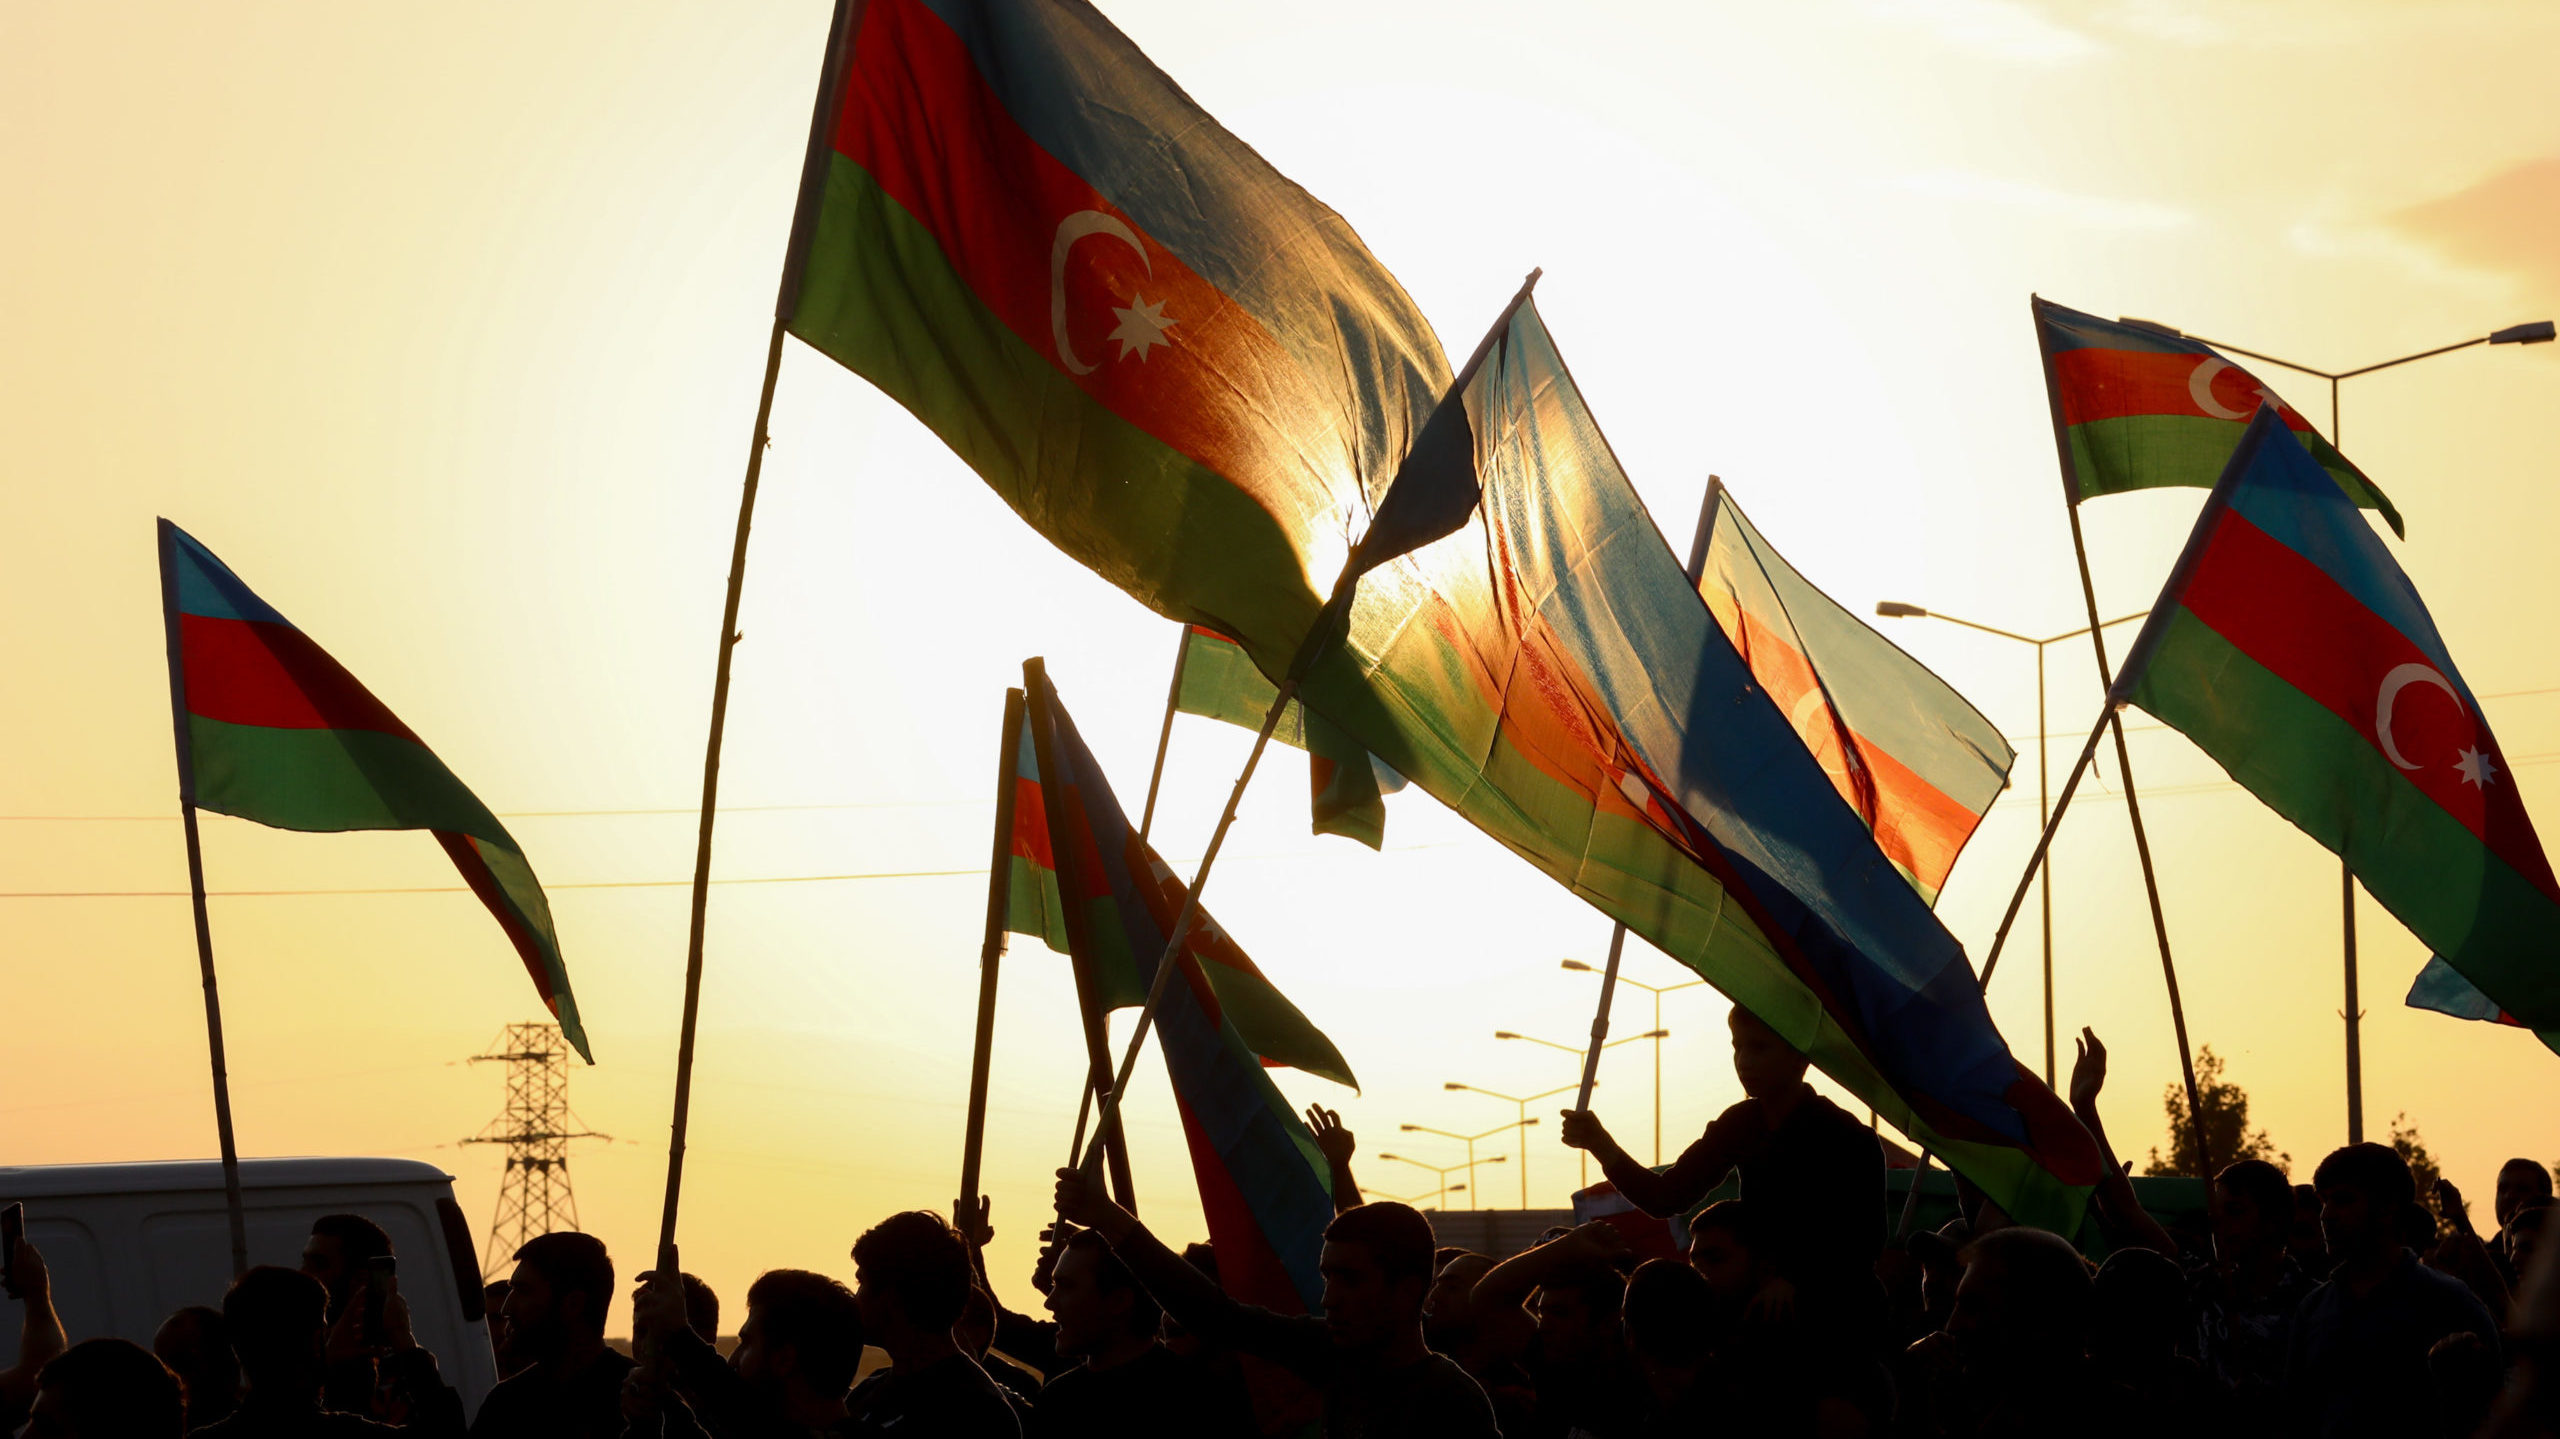 Diplomats: There’s More than Meets the Eye in Nagorno-Karabakh